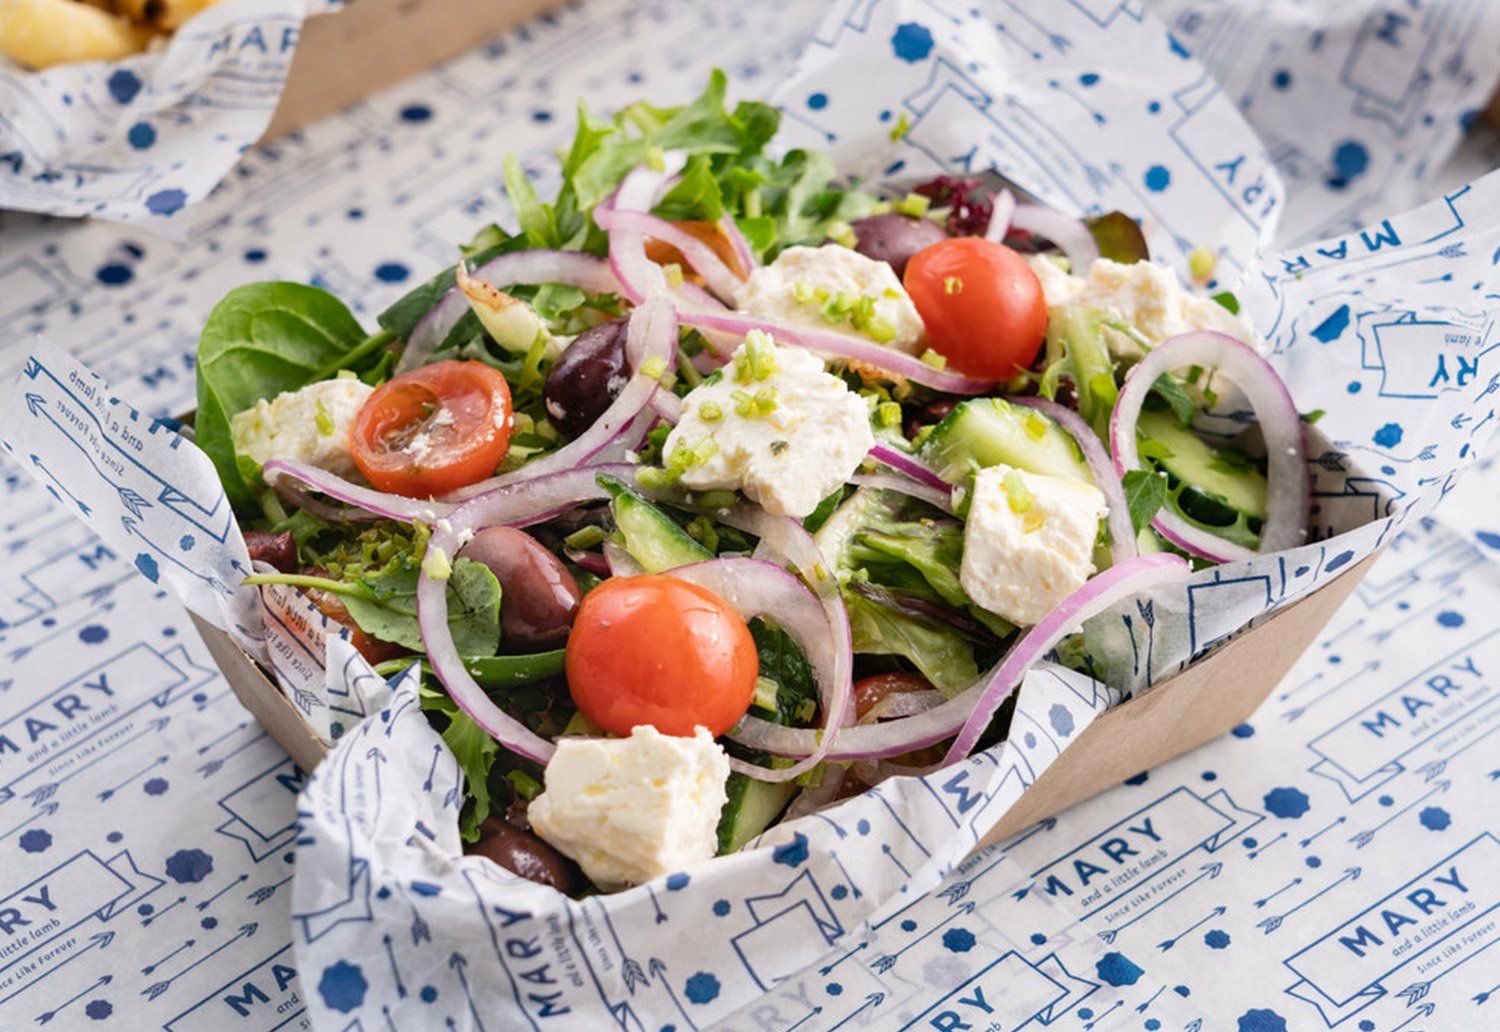 Image of salad in Detpak Endura food tray